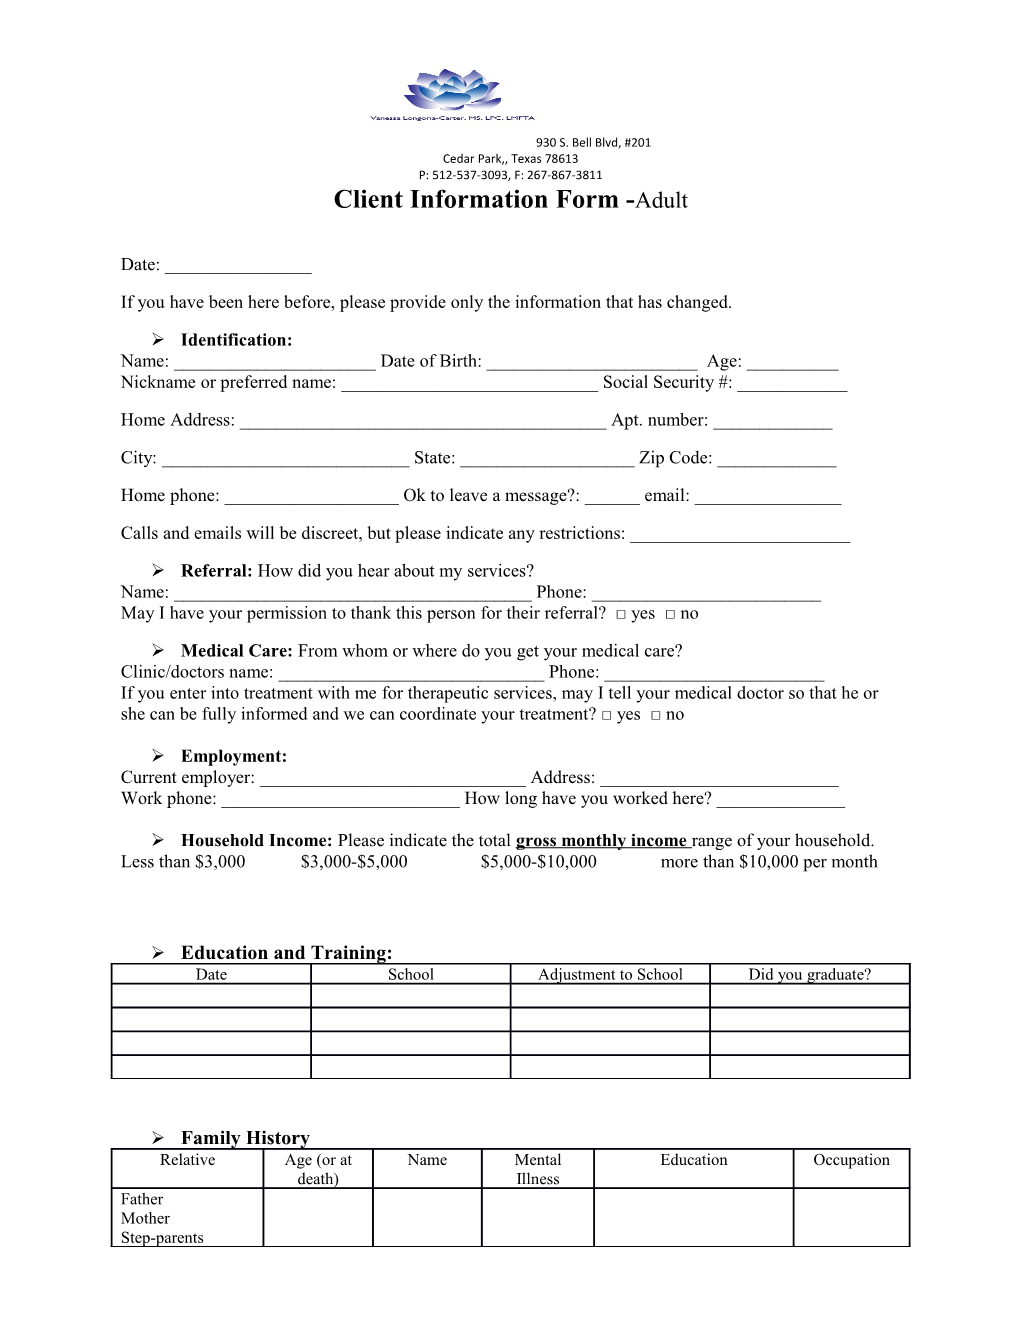 Client Information Form - Adult